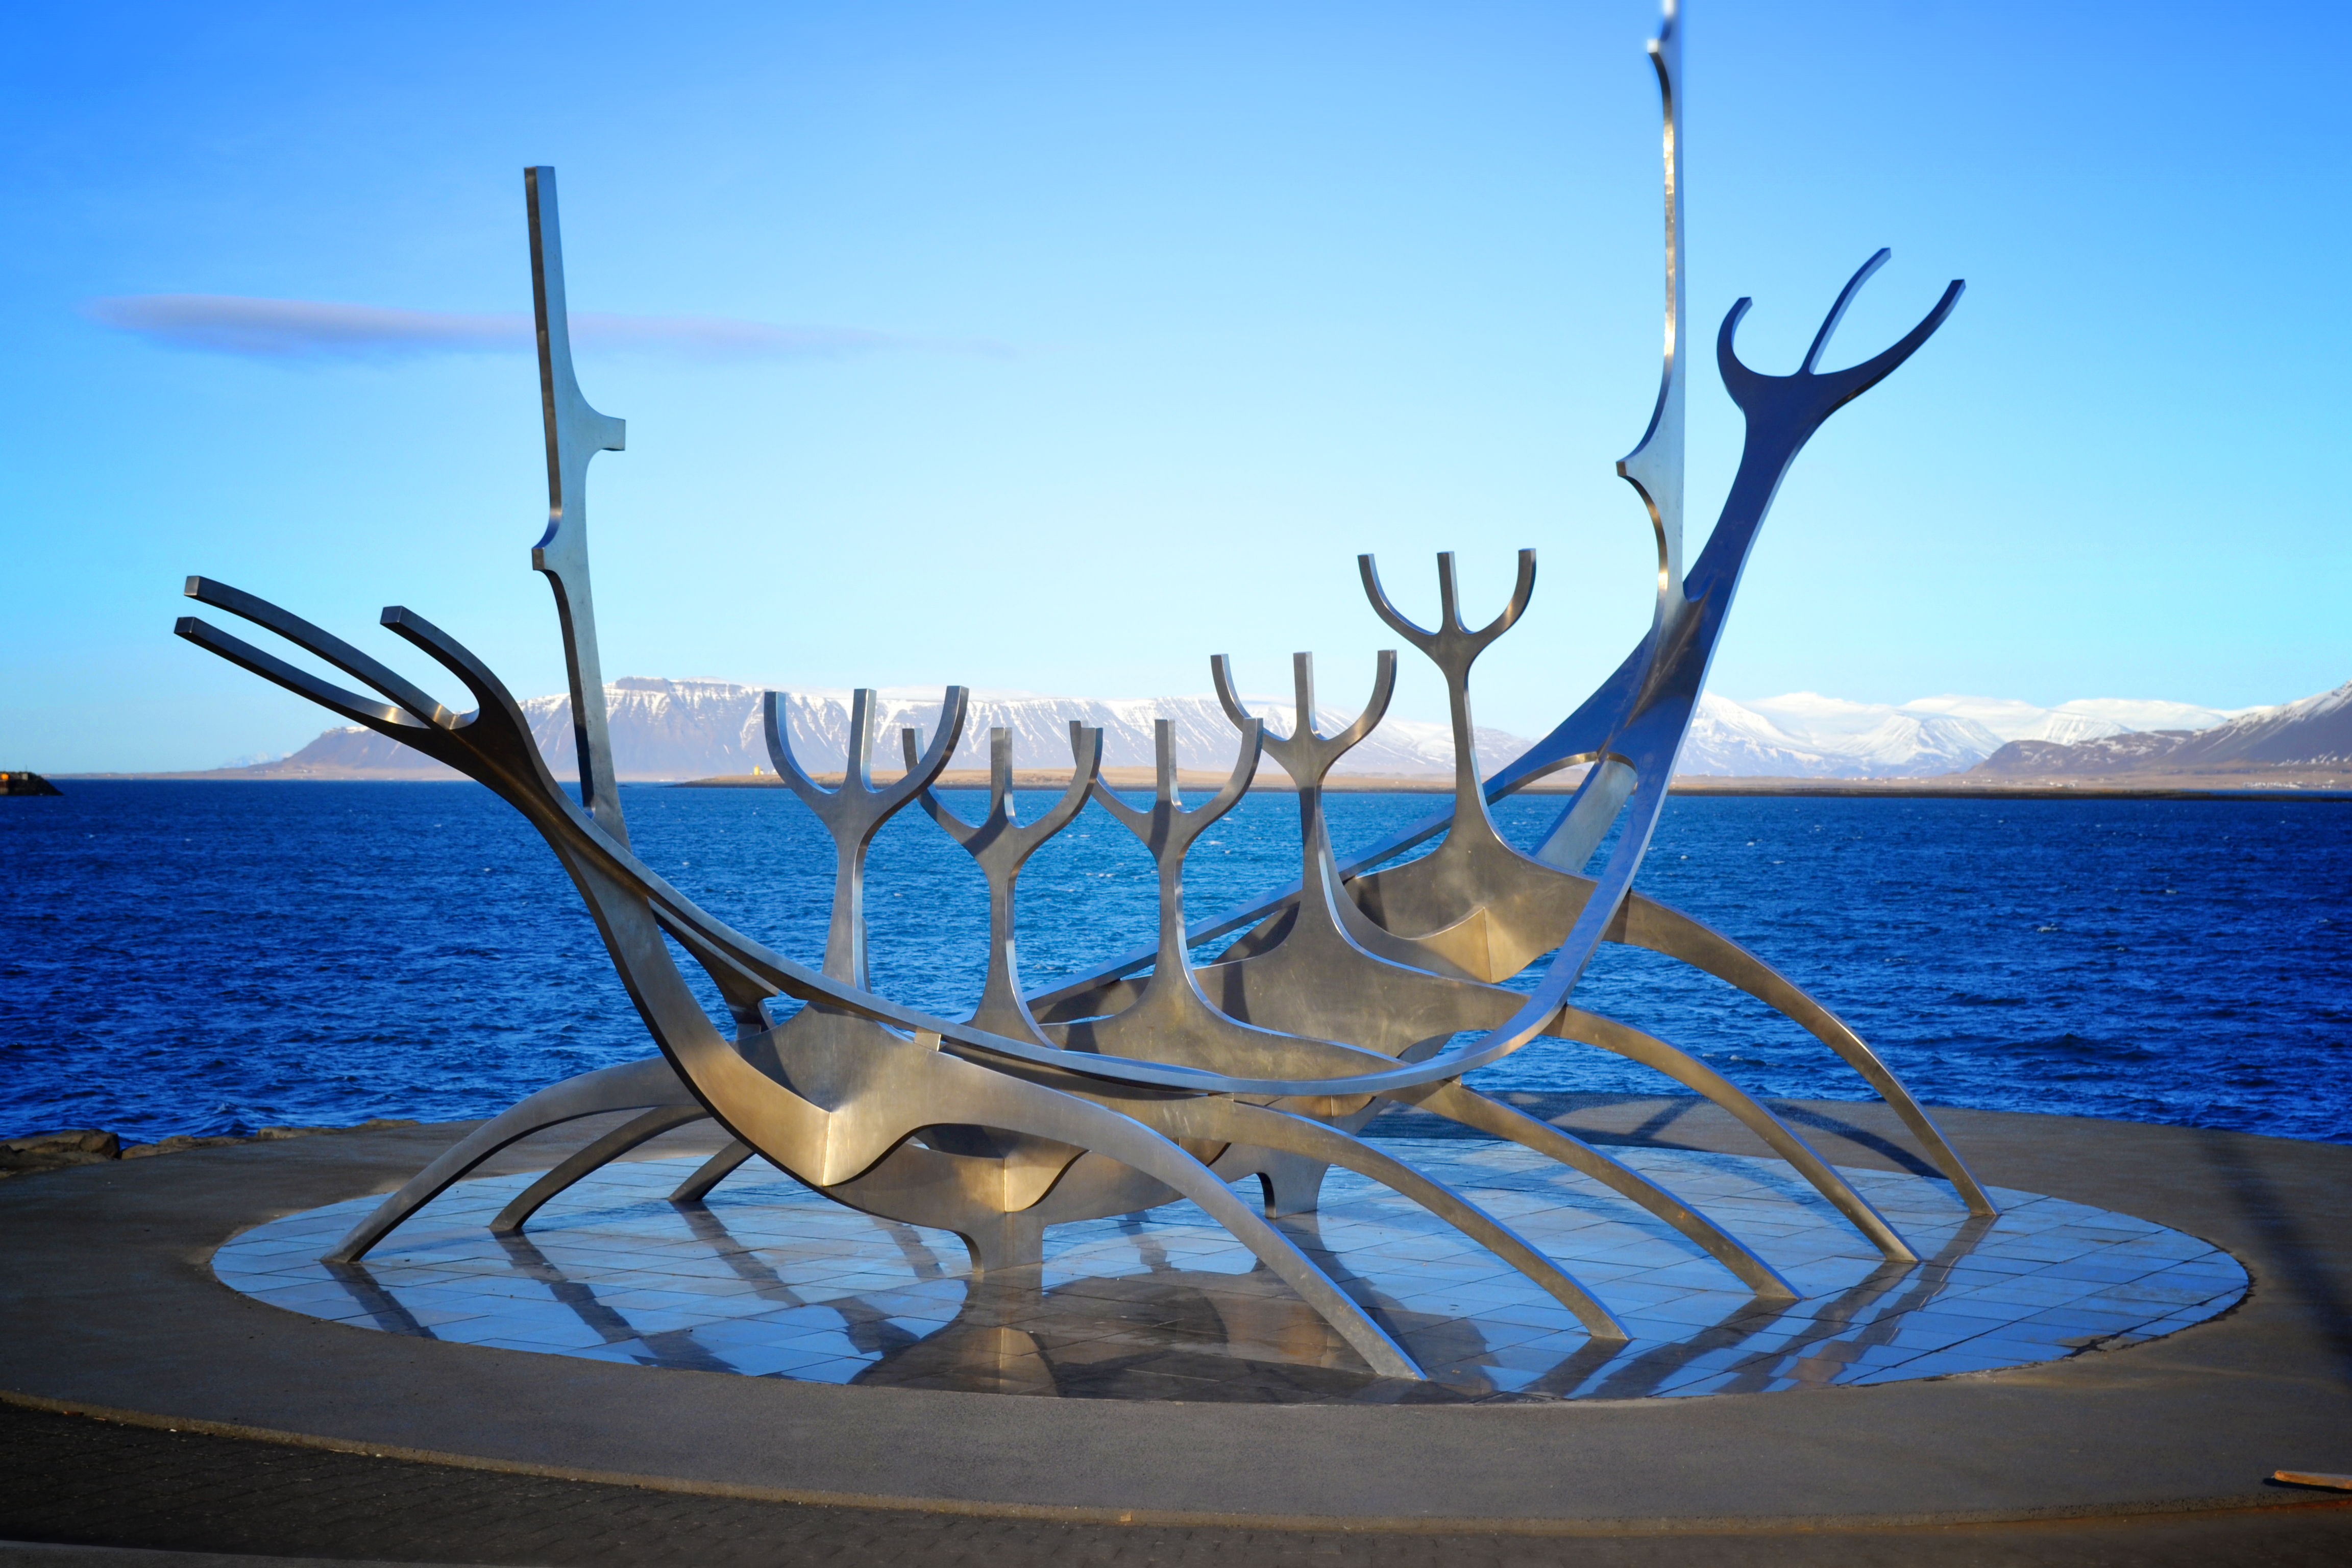 https://www.tenpennydreams.com/wp-content/uploads/2014/03/Winter-Solfar-sculpture.jpg